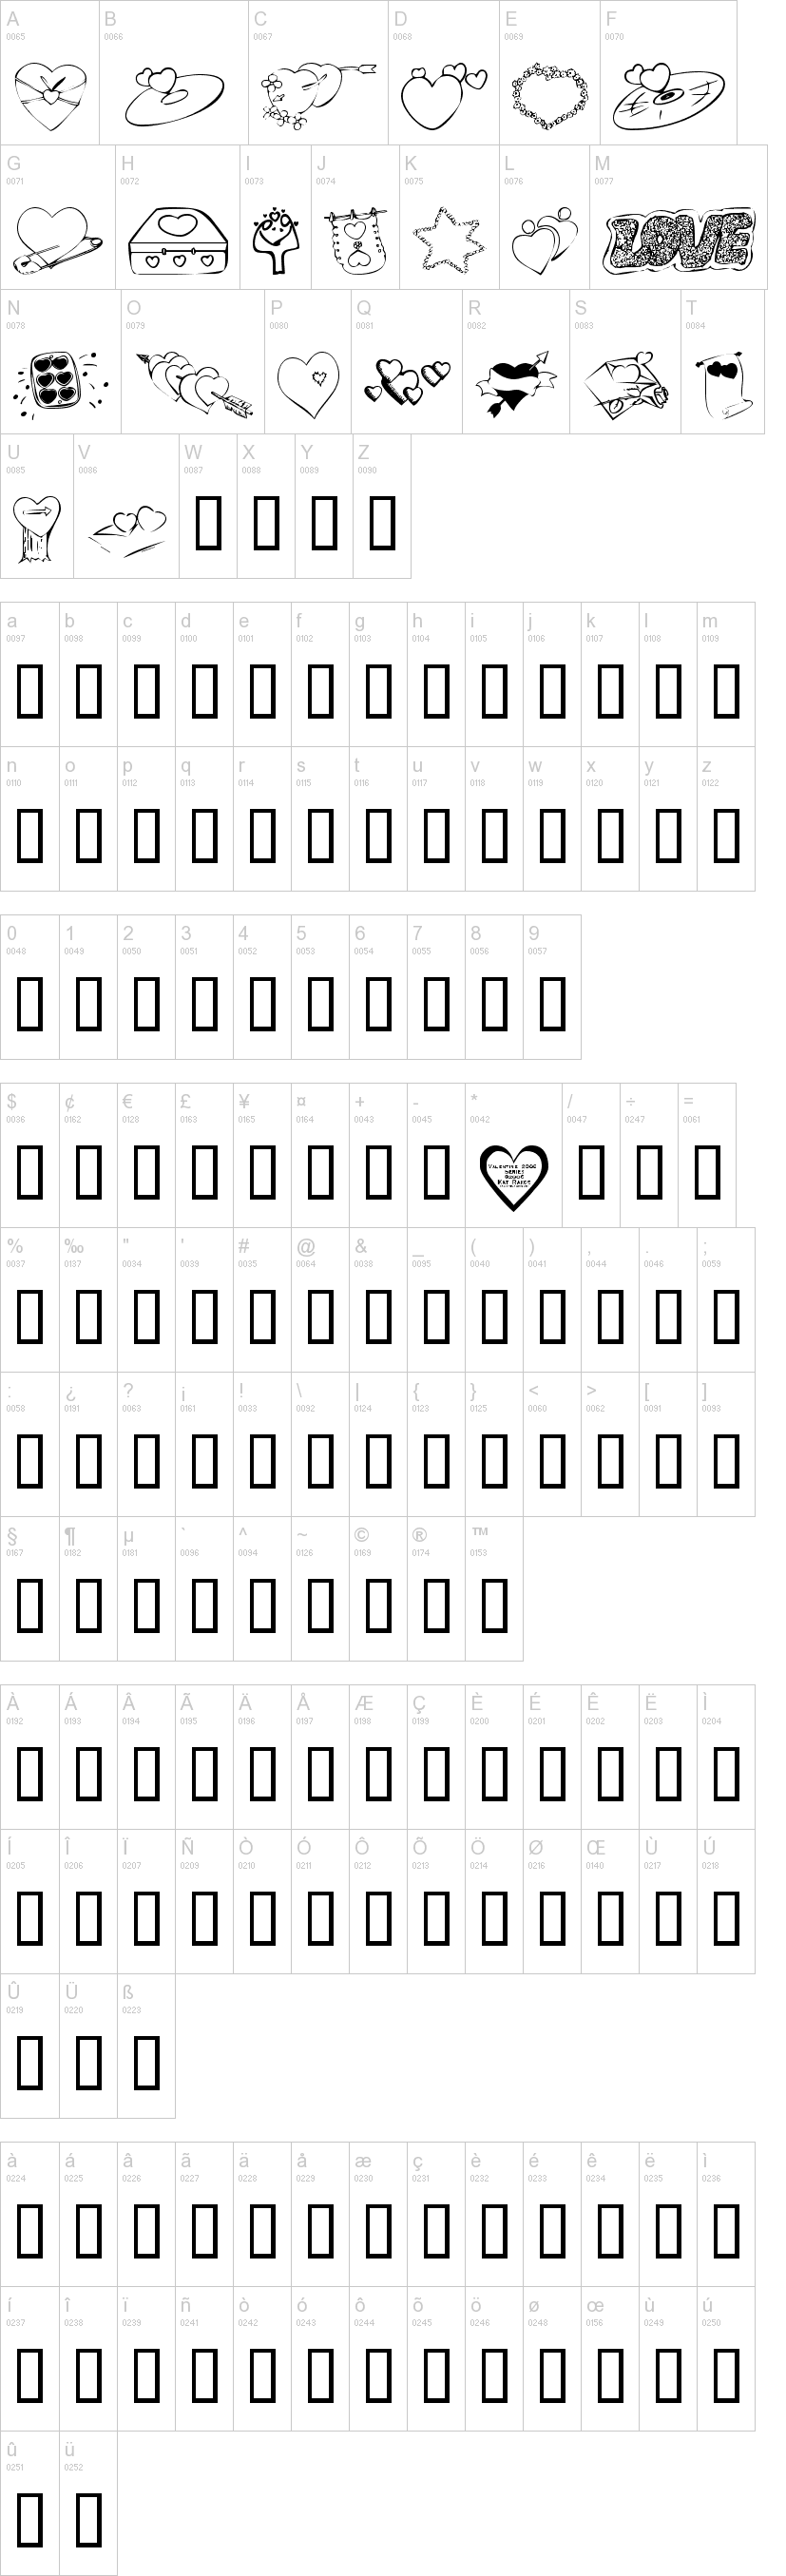 KR Valentines 2006 Seven字符映射图